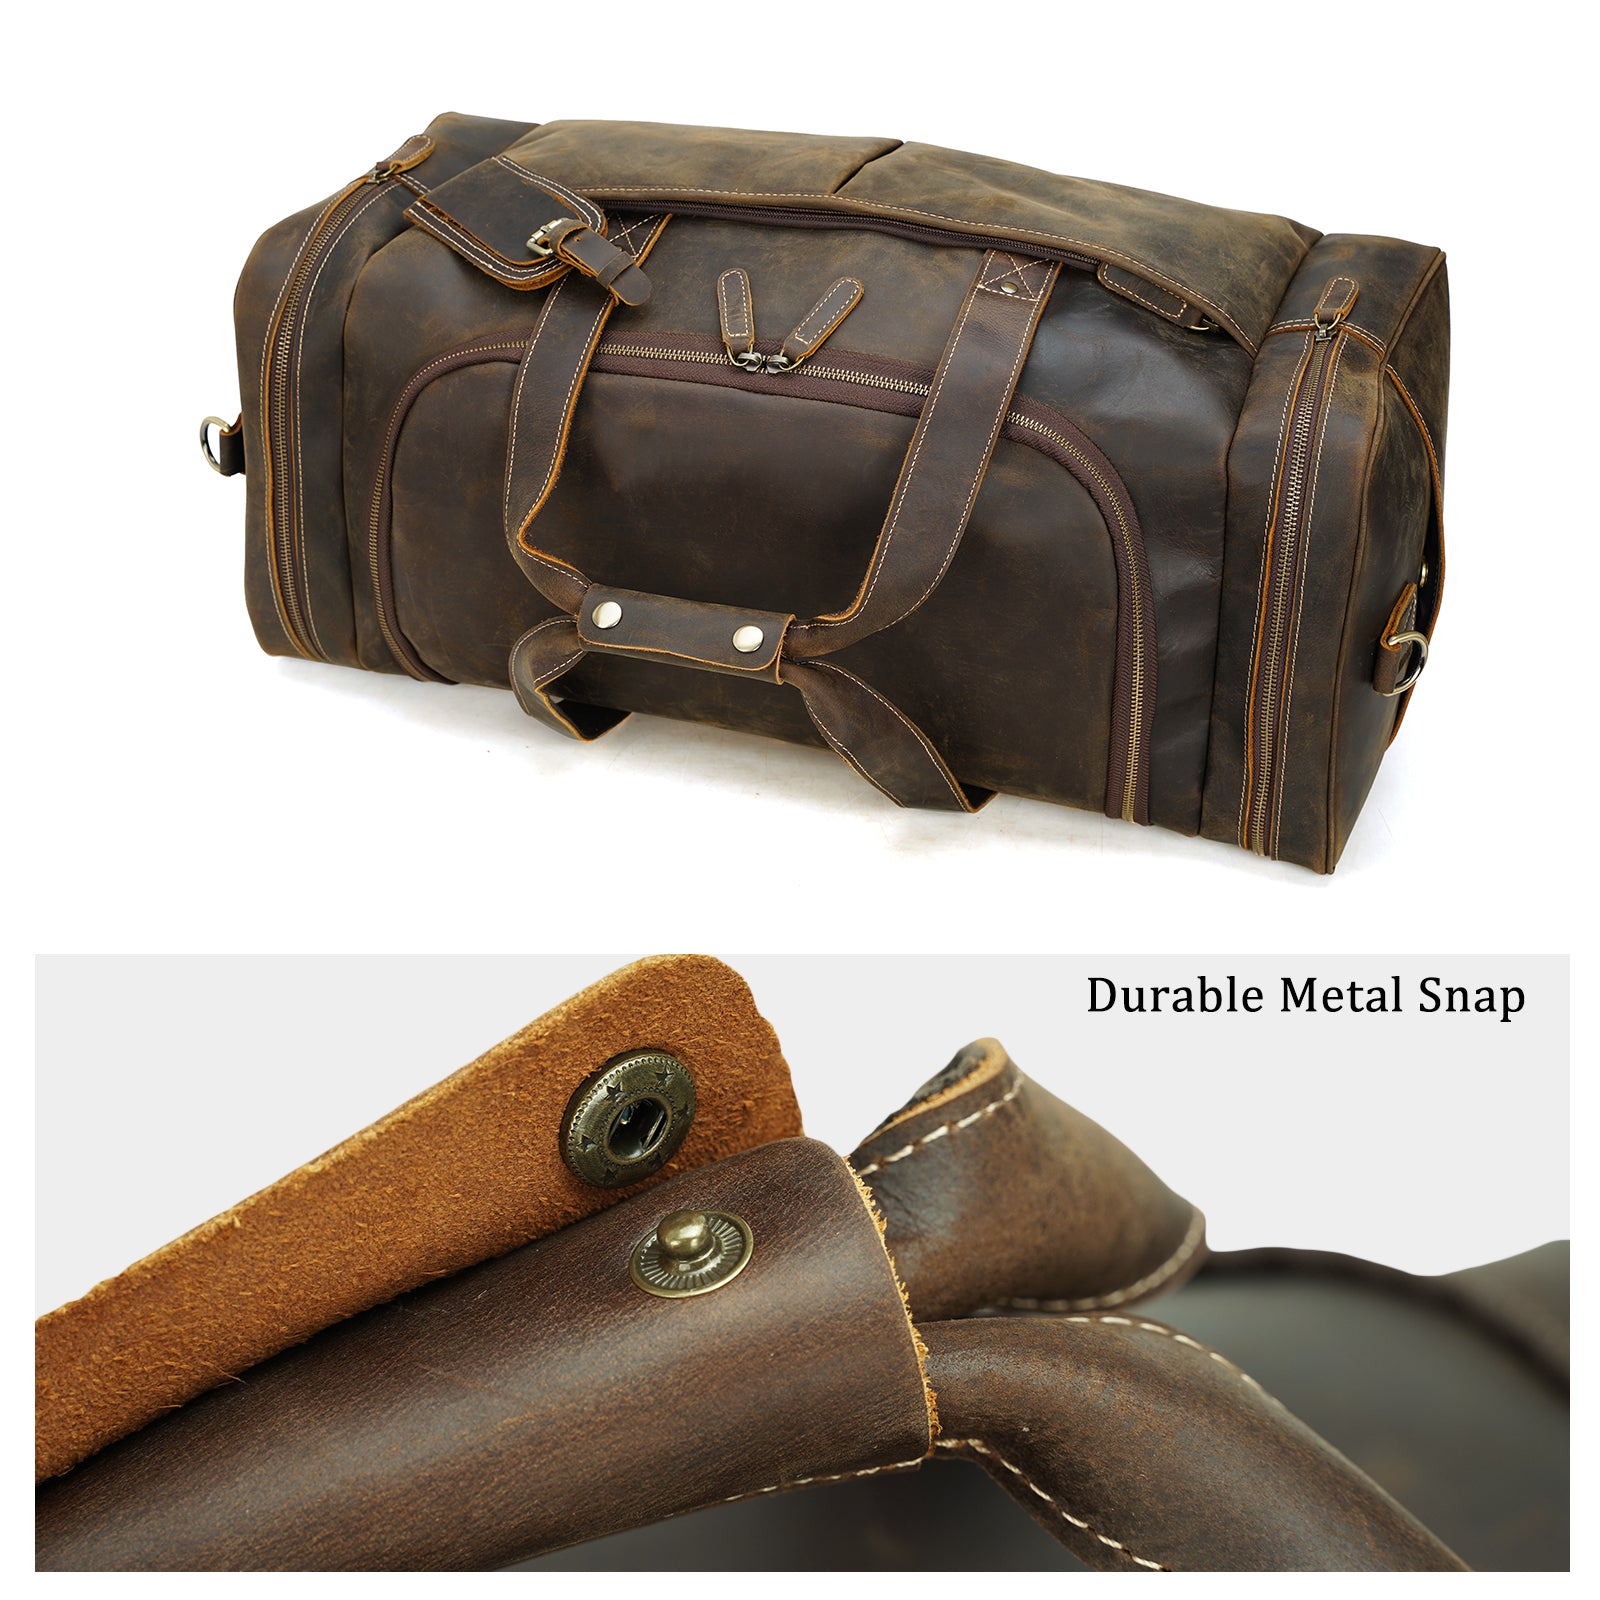 Full Grain Buffalo Leather Duffle Bag with Shoe Compartment